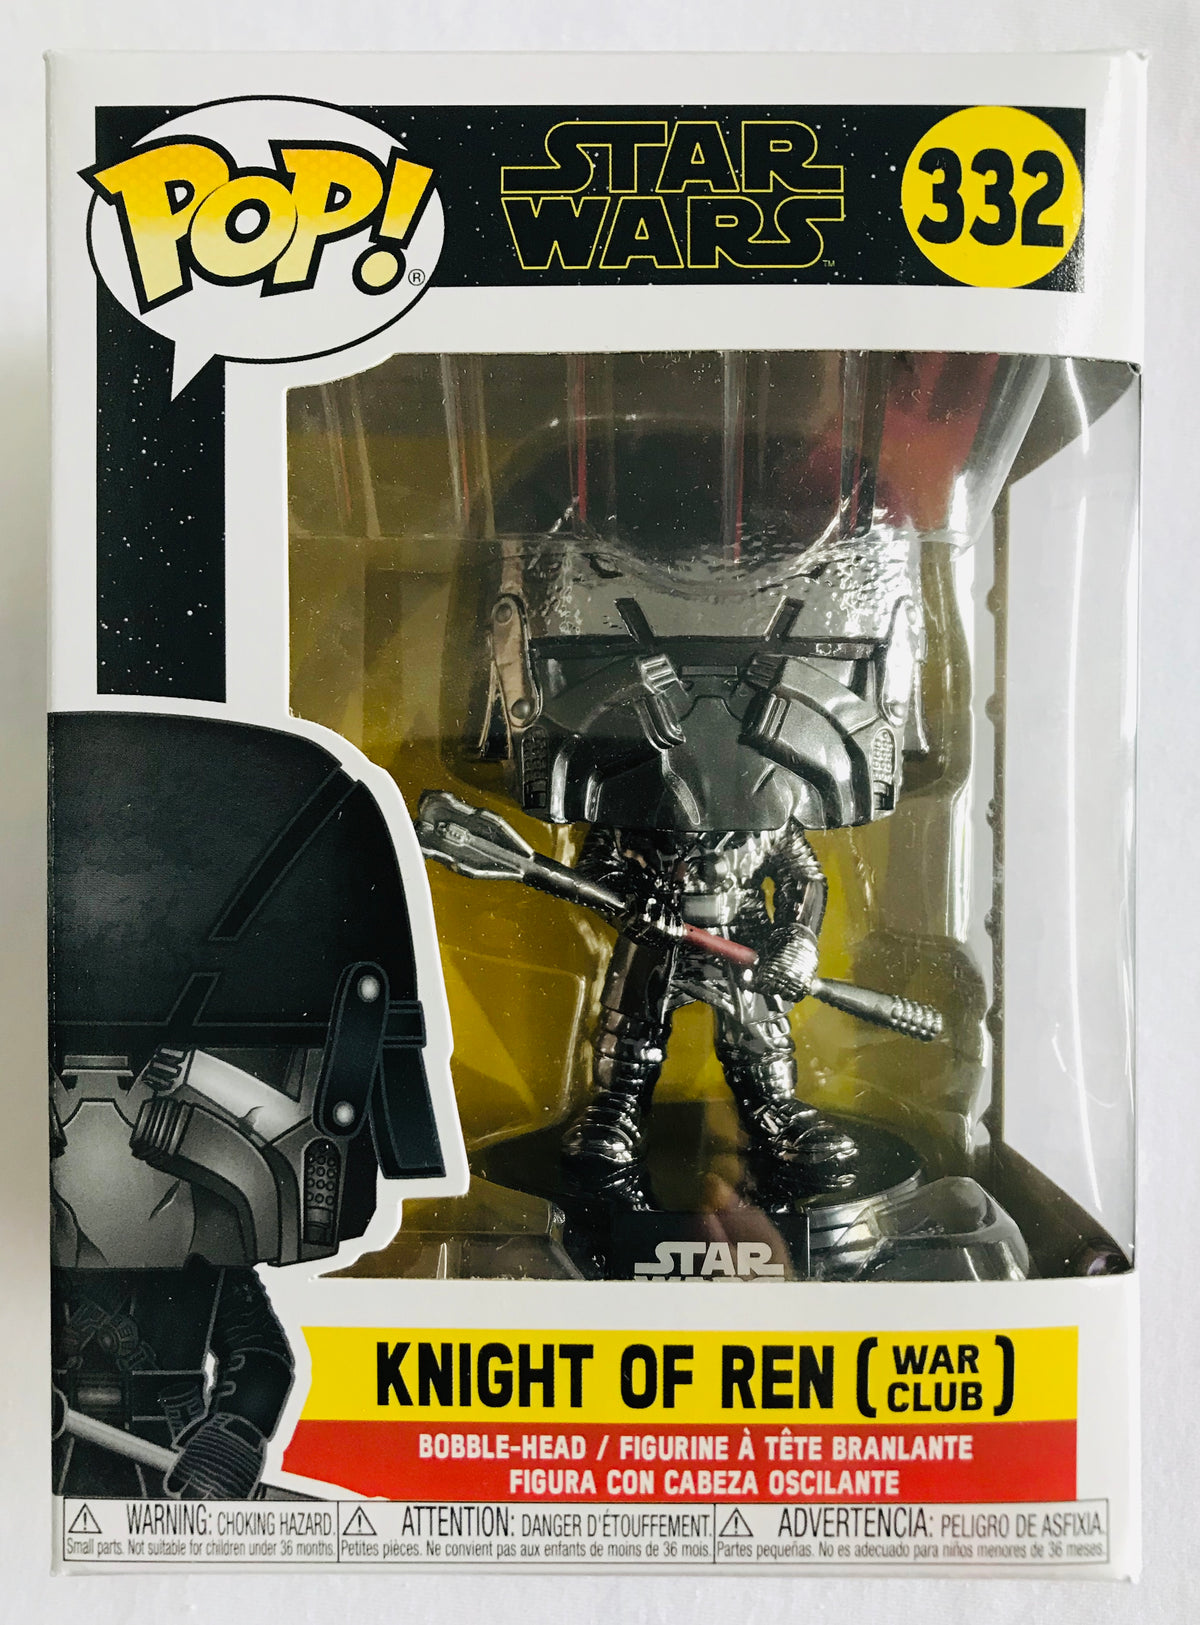 Knight of Ren (War Club) (332)